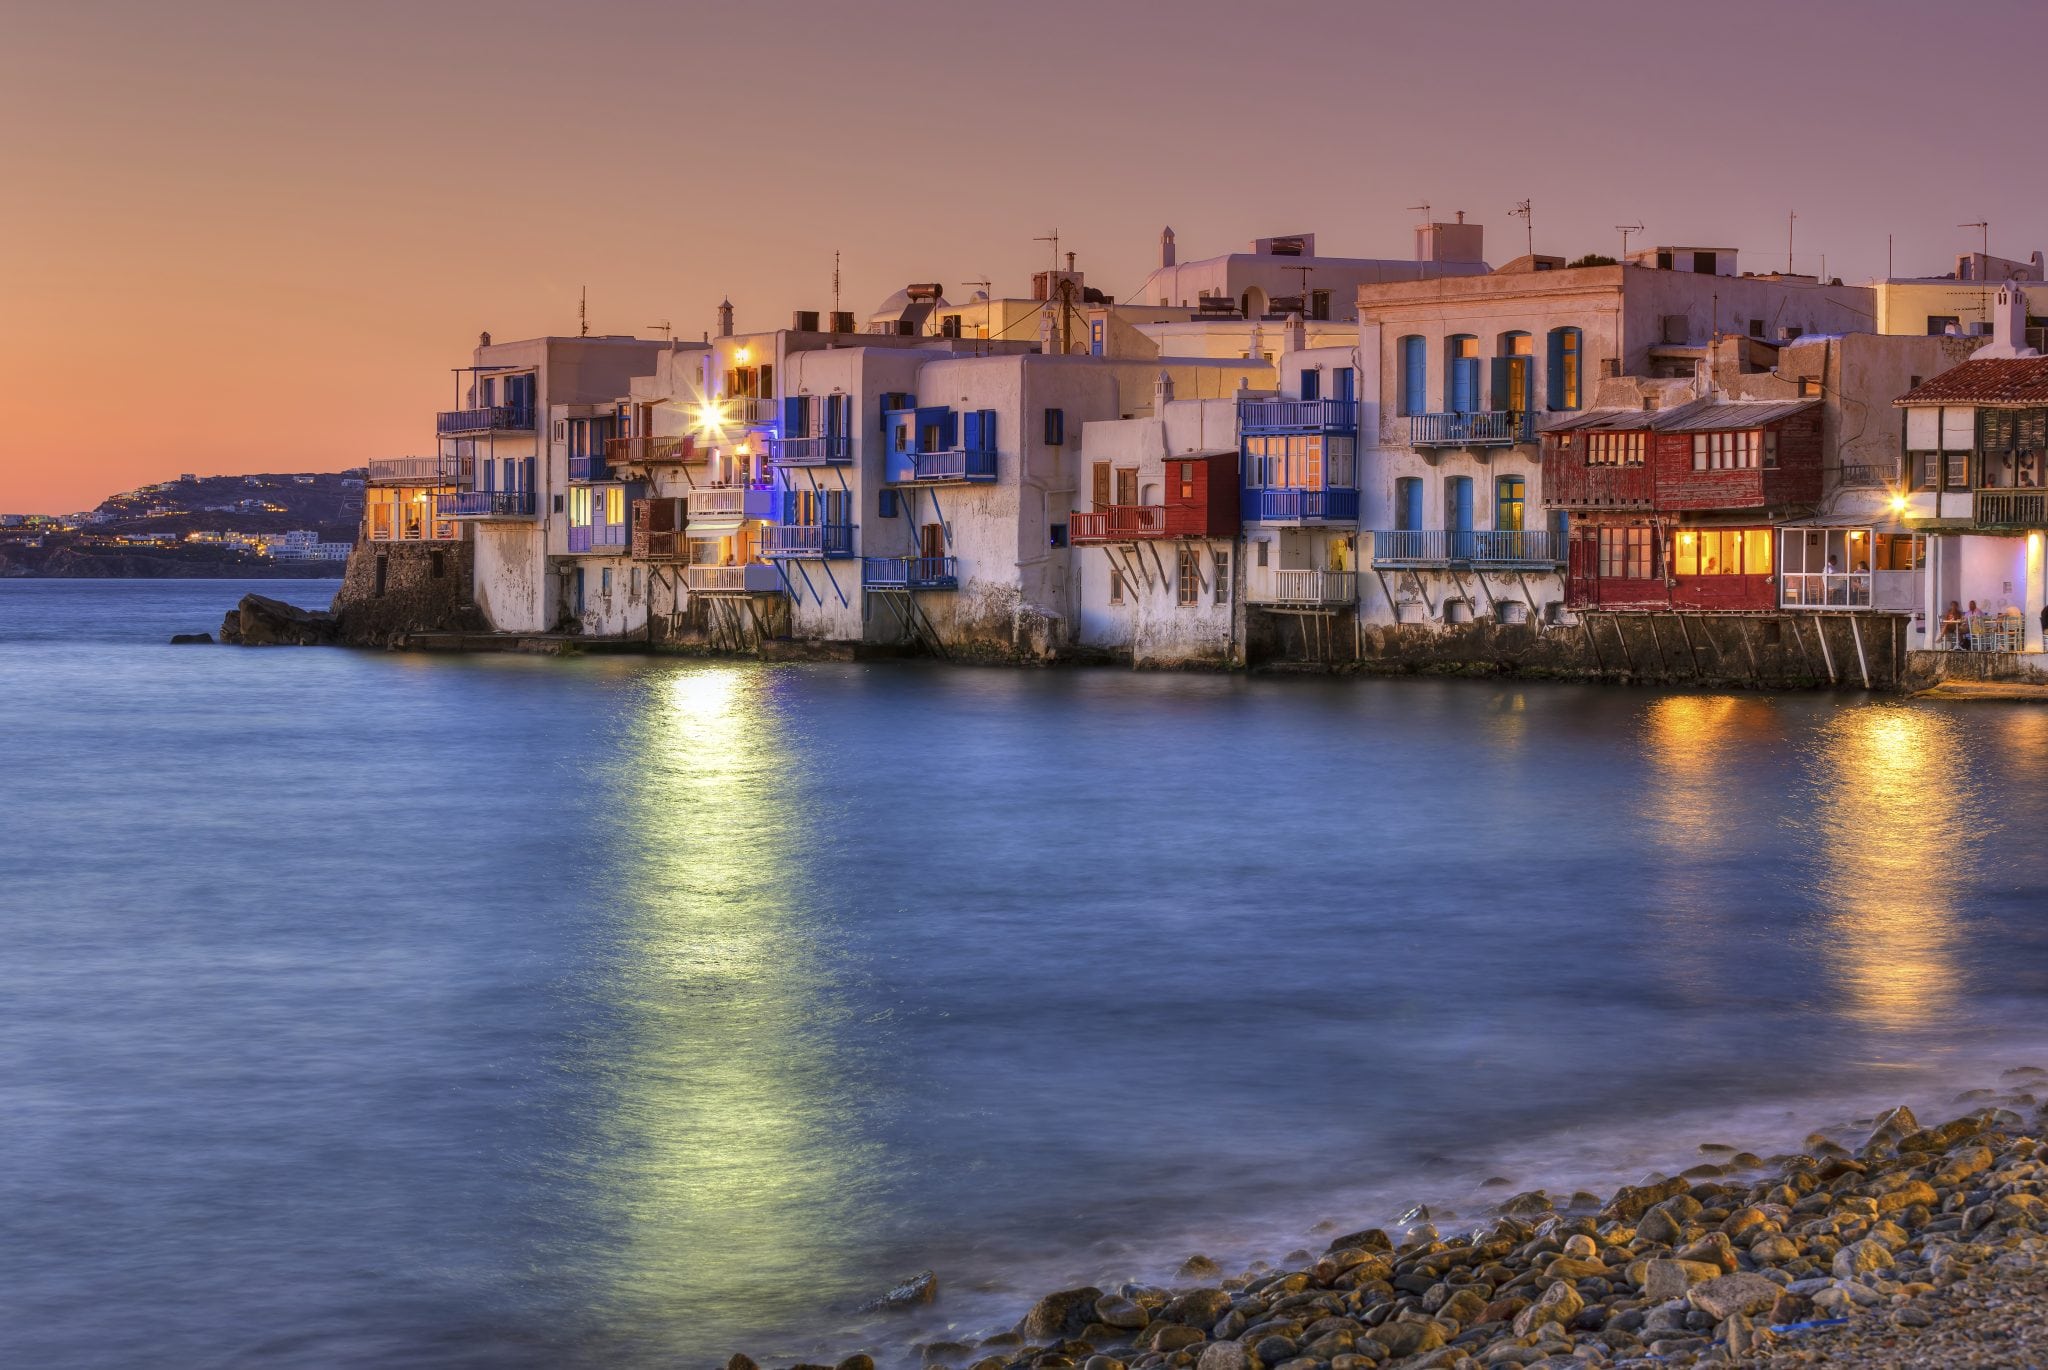 The town known as Little Venice in Mykonos, Greece.